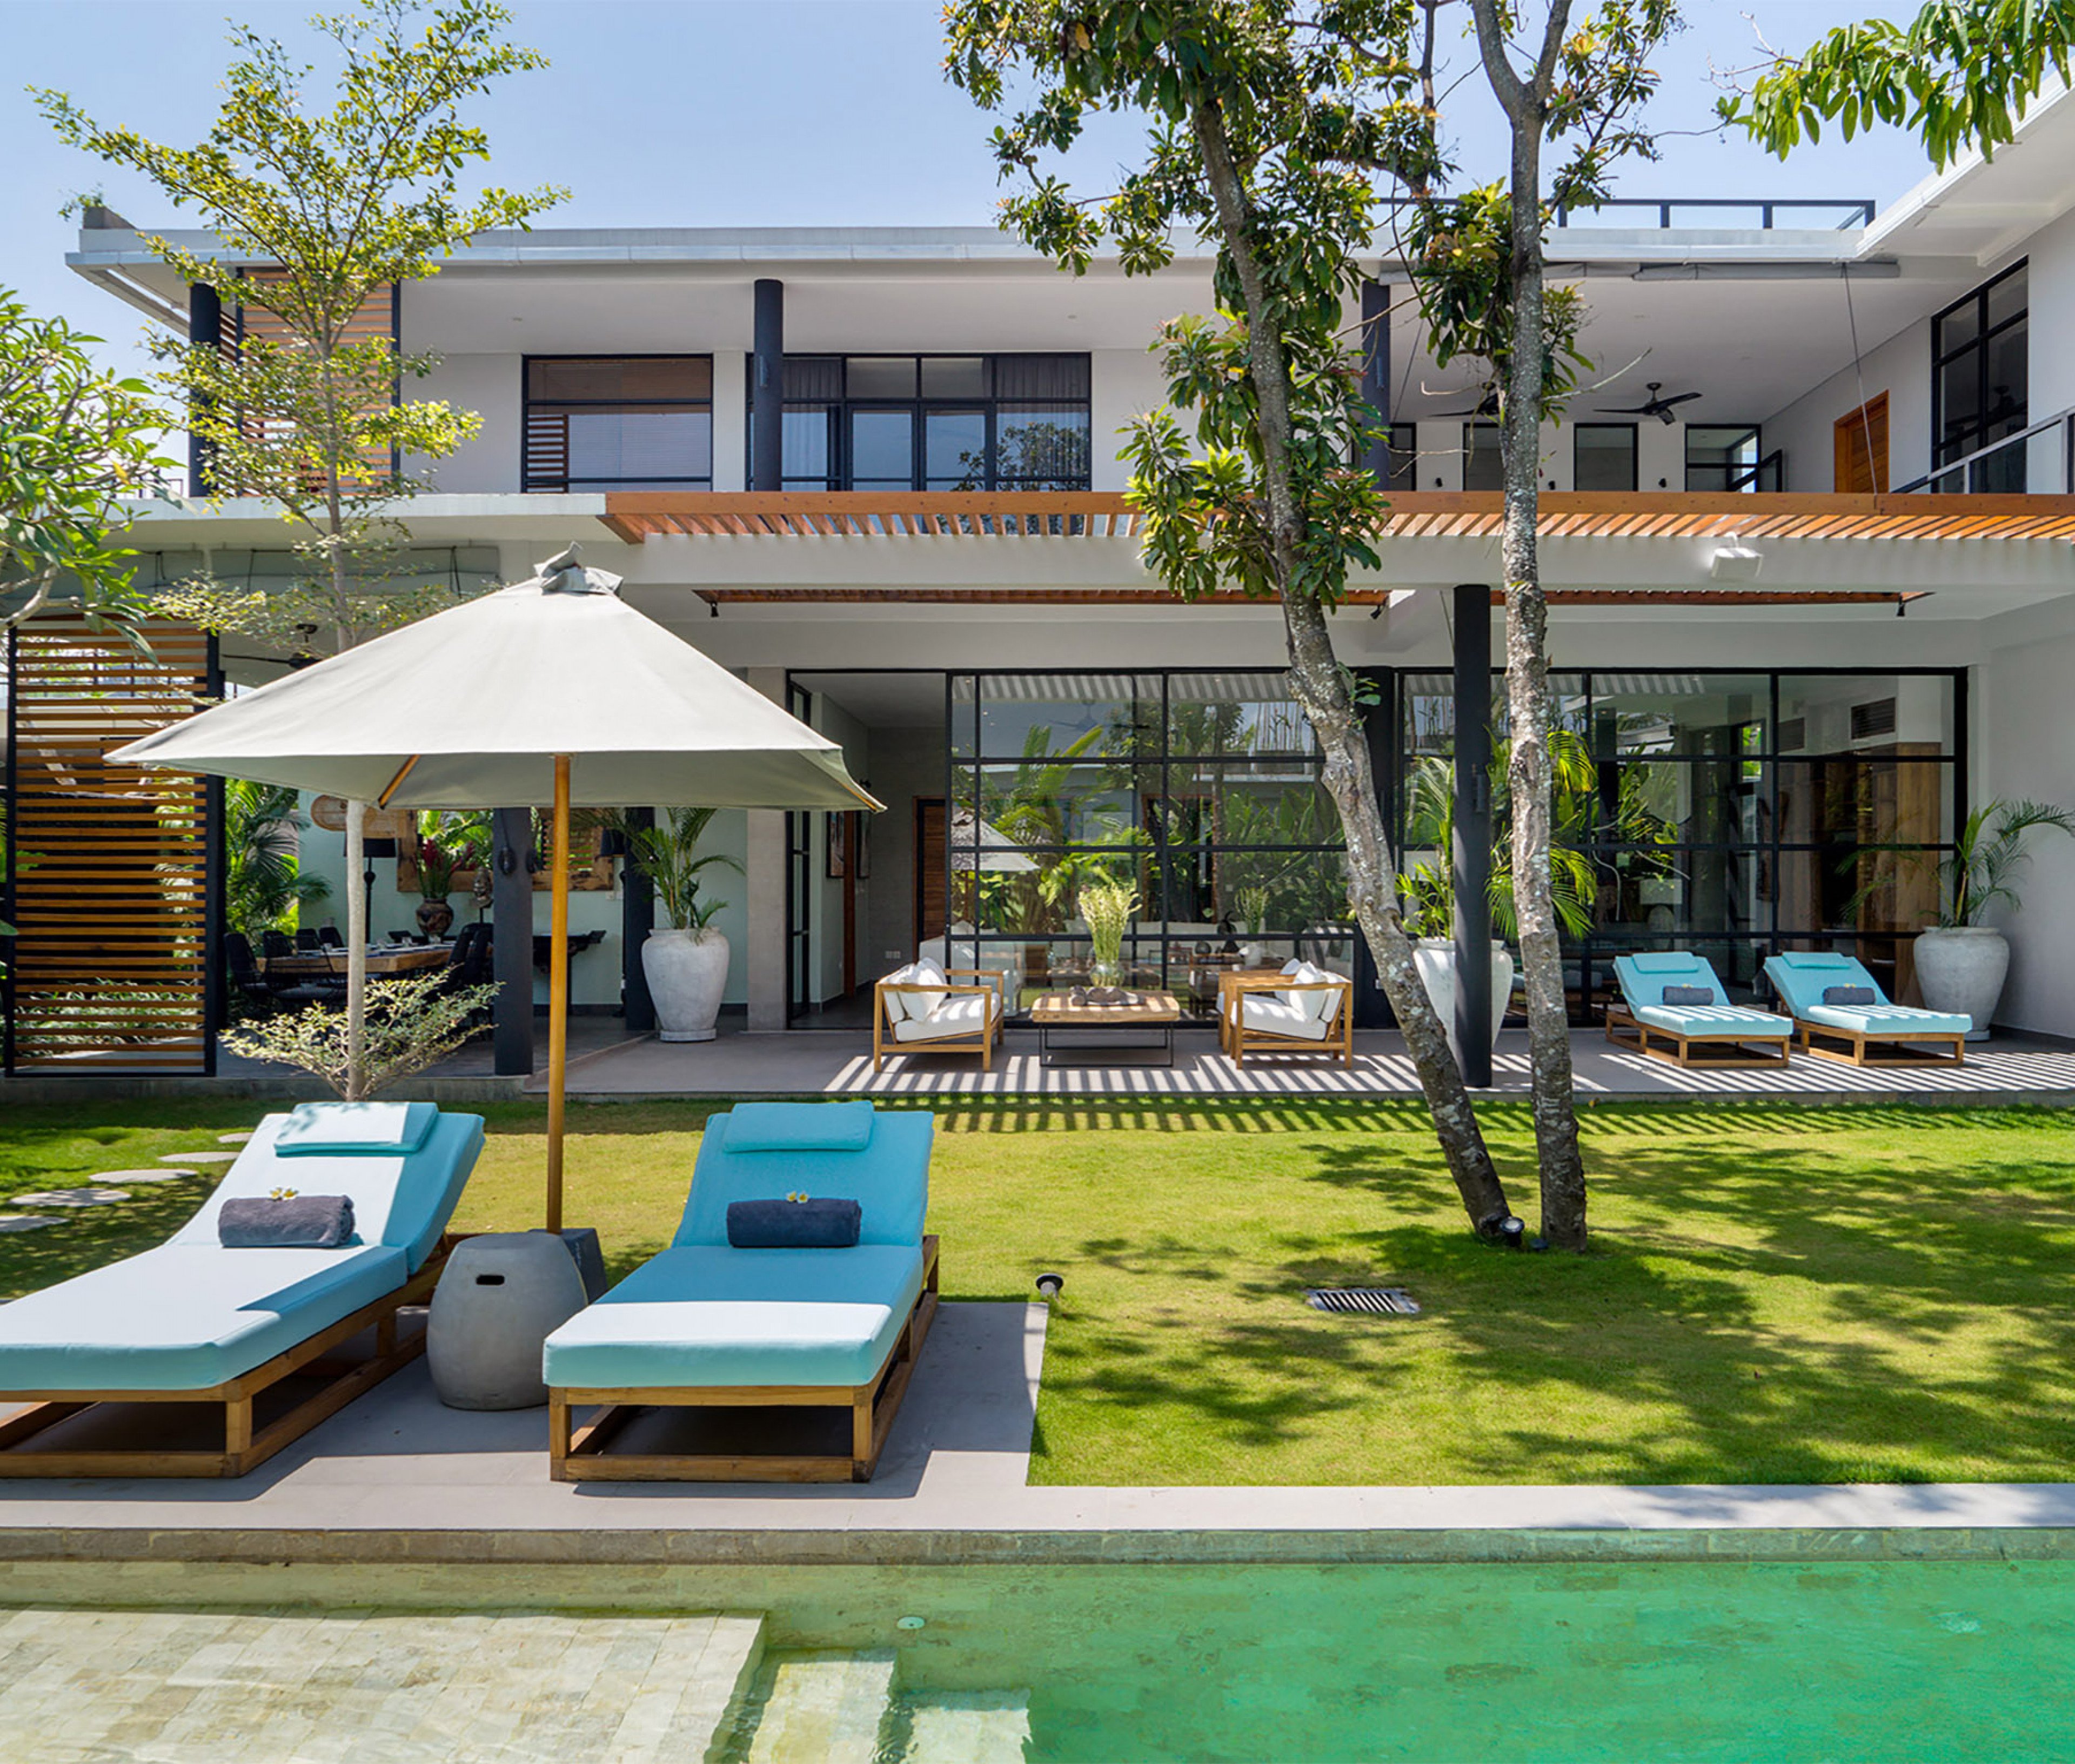 Canggu 5762 - Villa GU - Canggu, Bali monthly rentals 